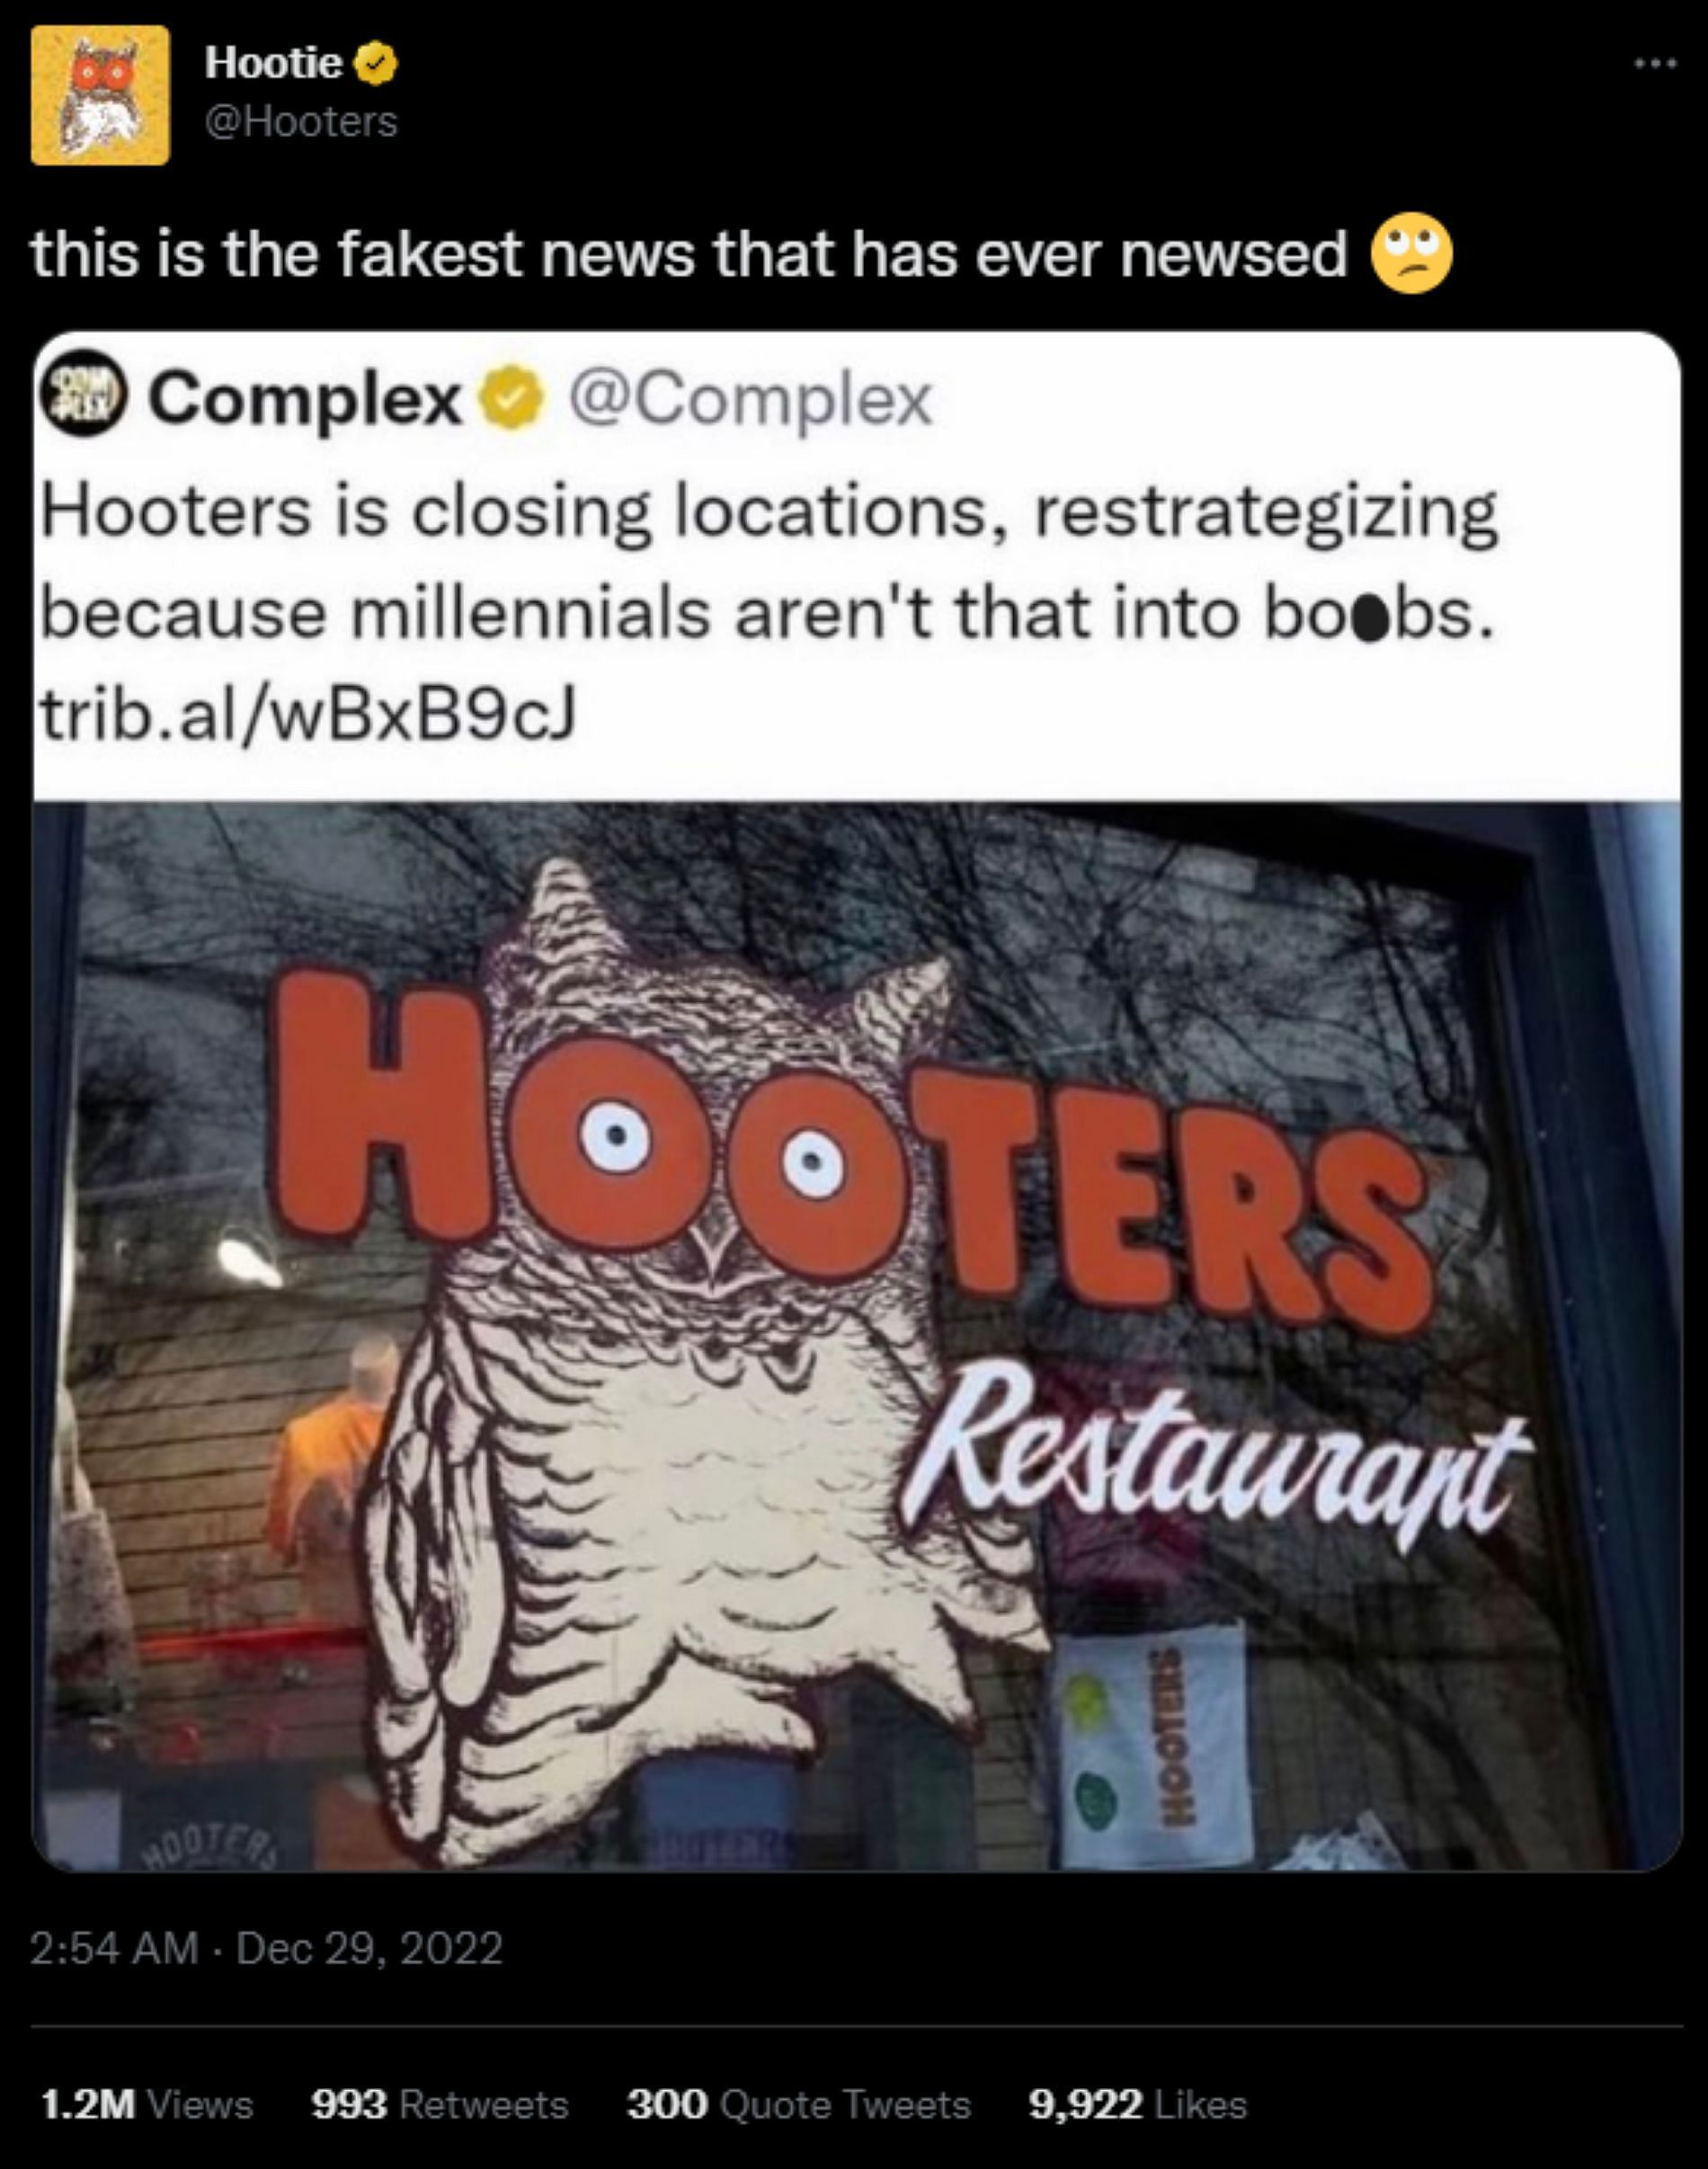 Restaurant responds to rumors of shut down and rebranding (Image via Twitter)